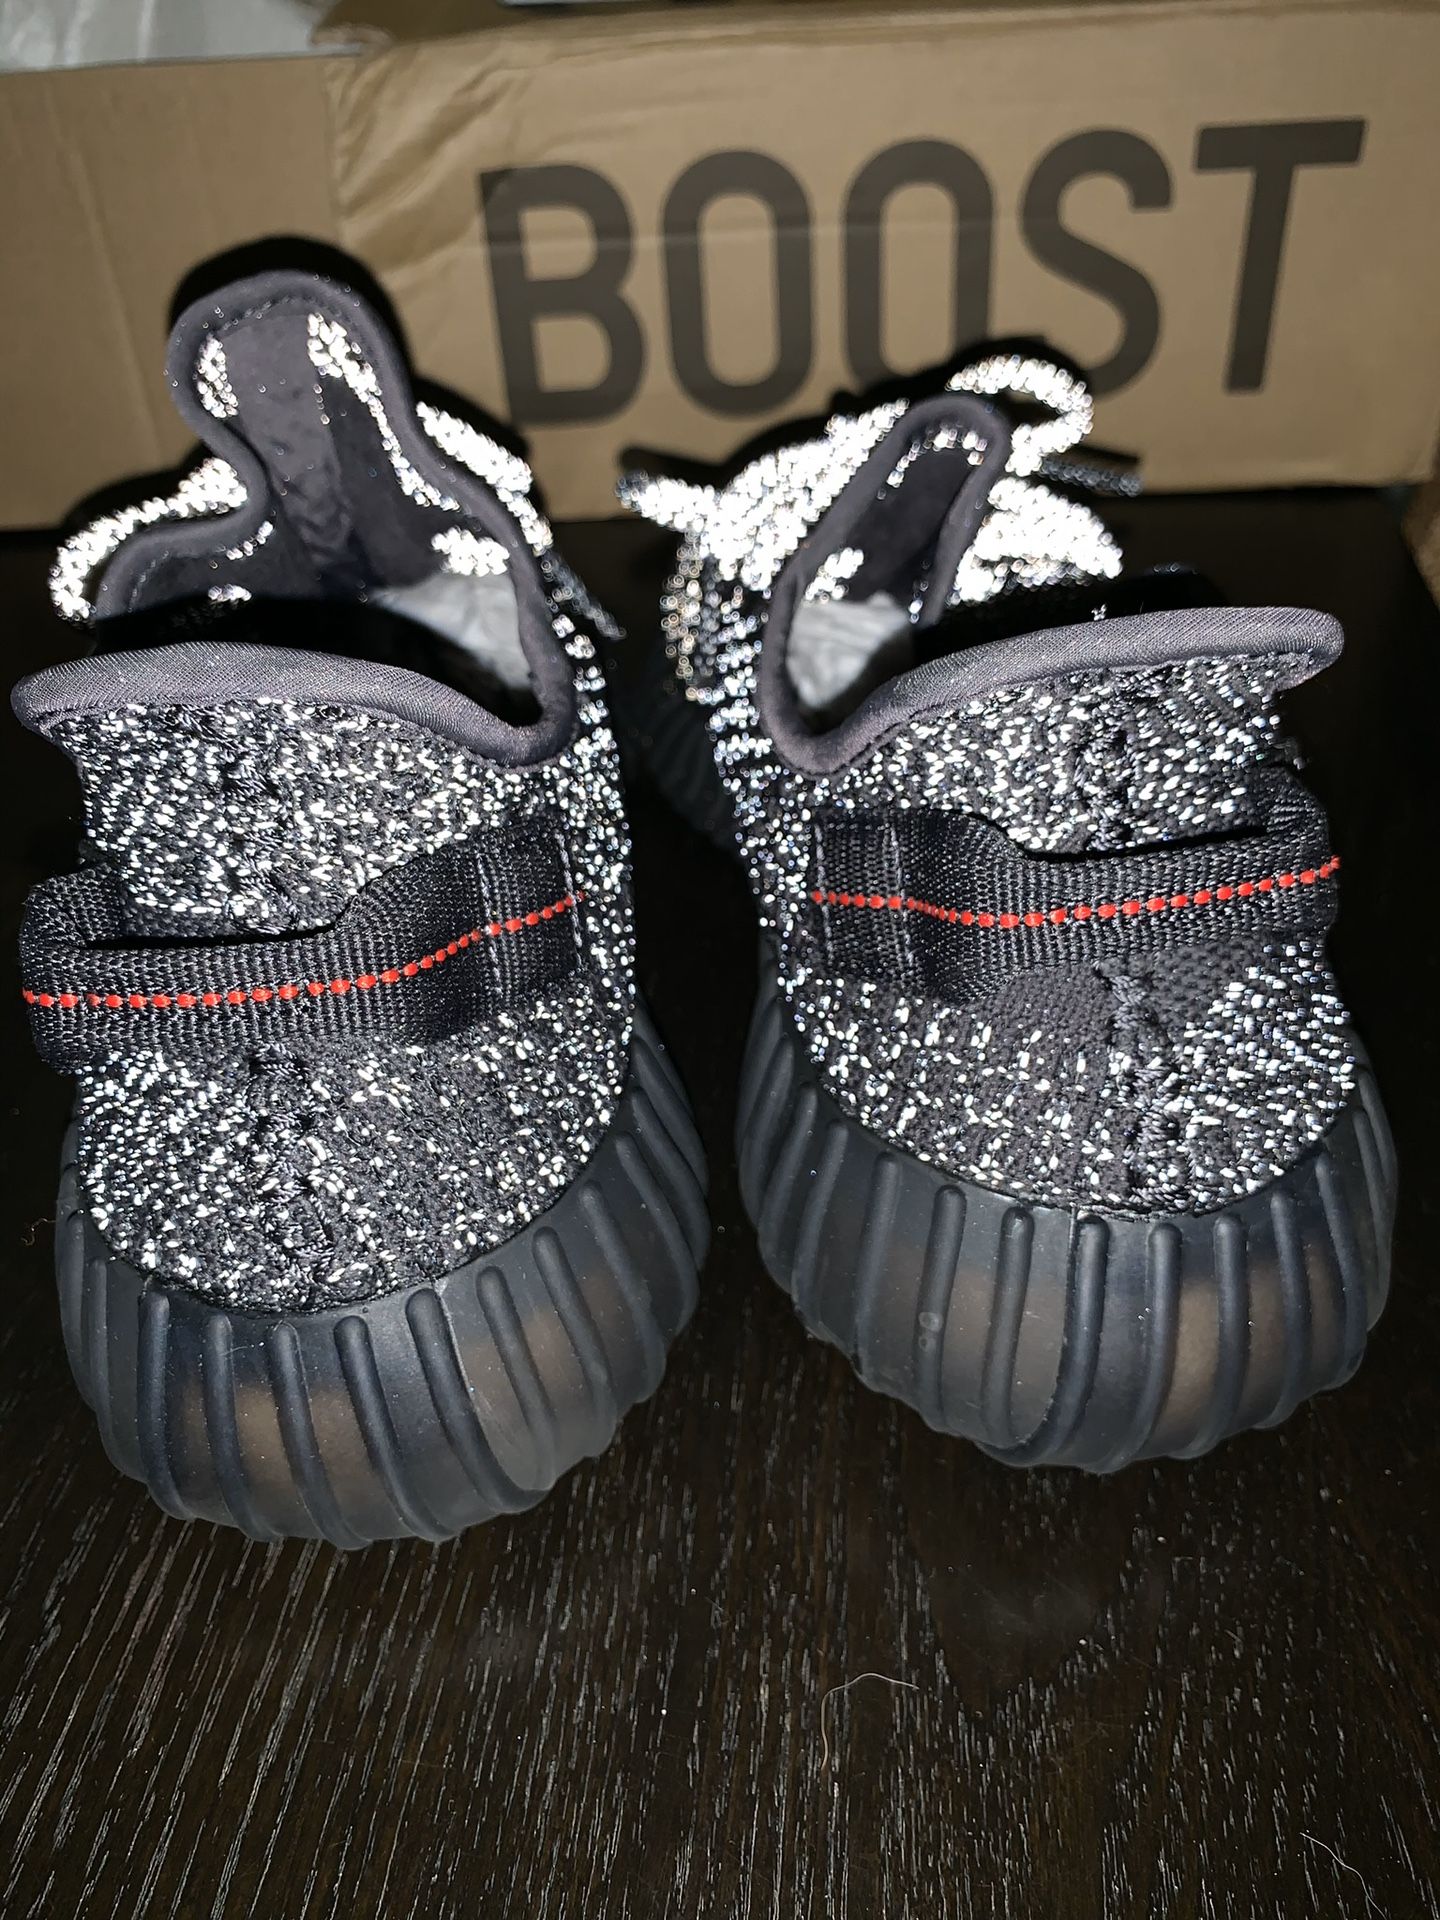 Yeezy Boost 350 V2 Black Reflective Adidas Kanye